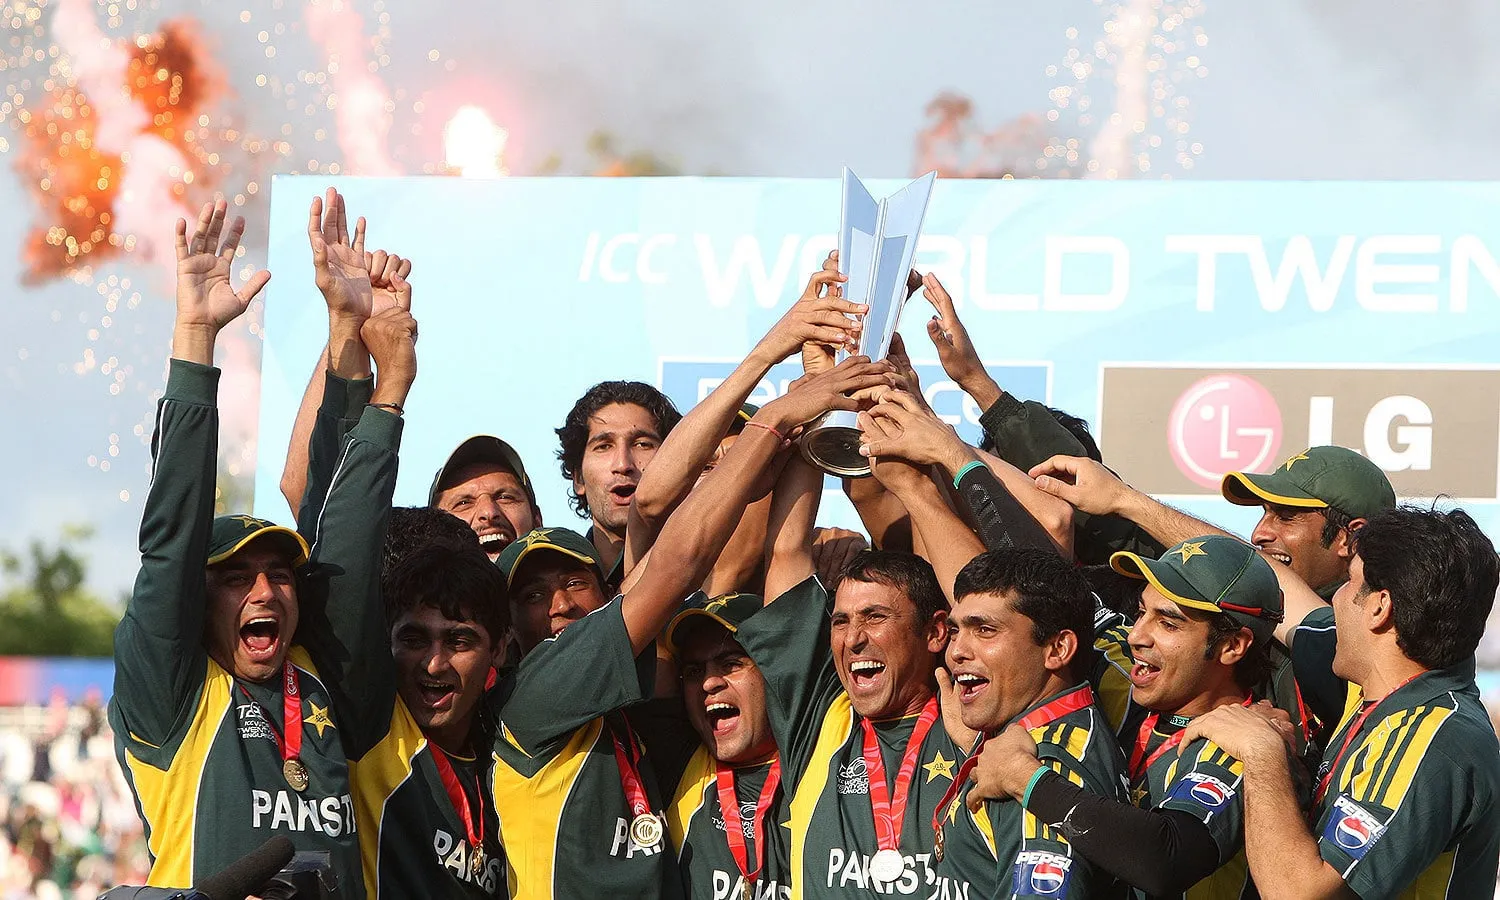 Pakistan T20 Champions of 2009